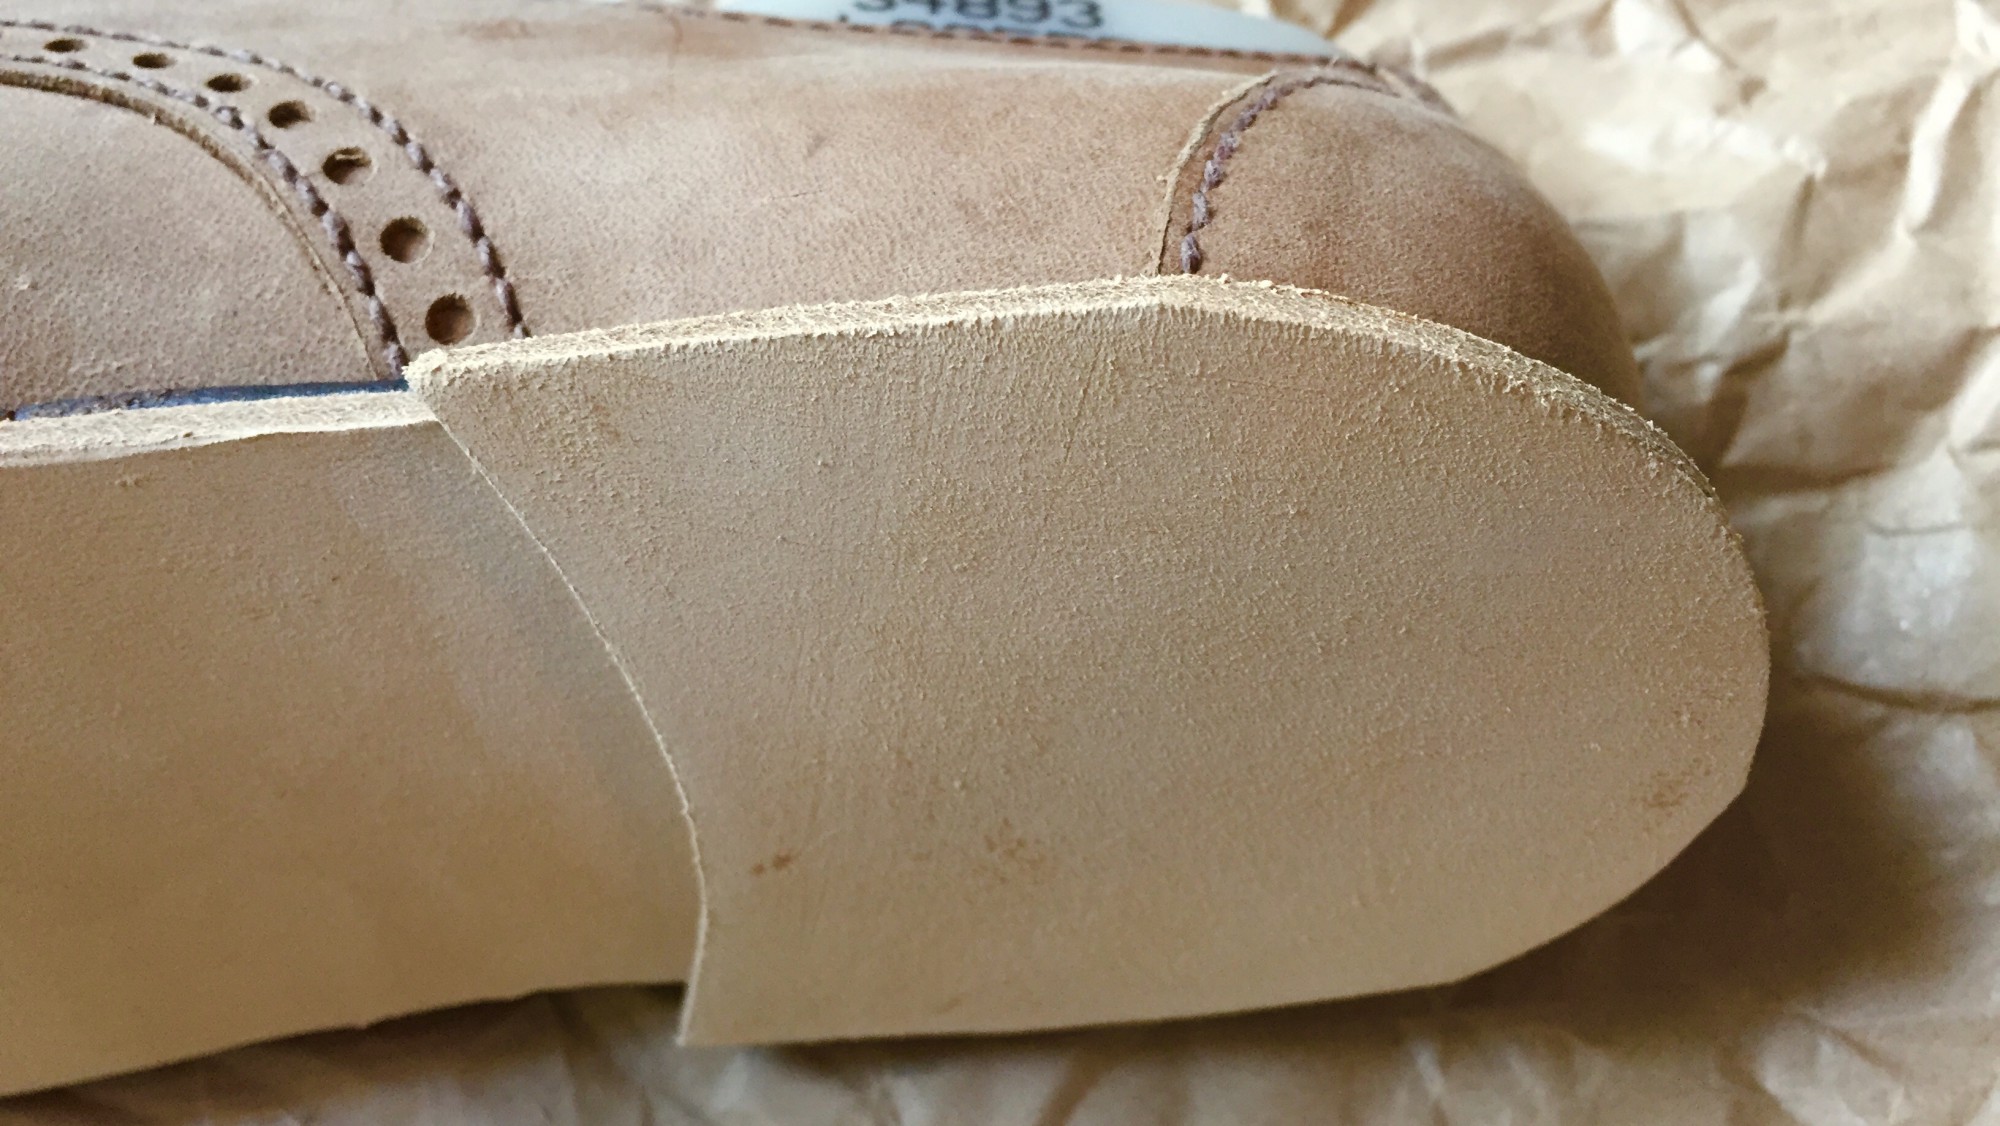 First heel layer